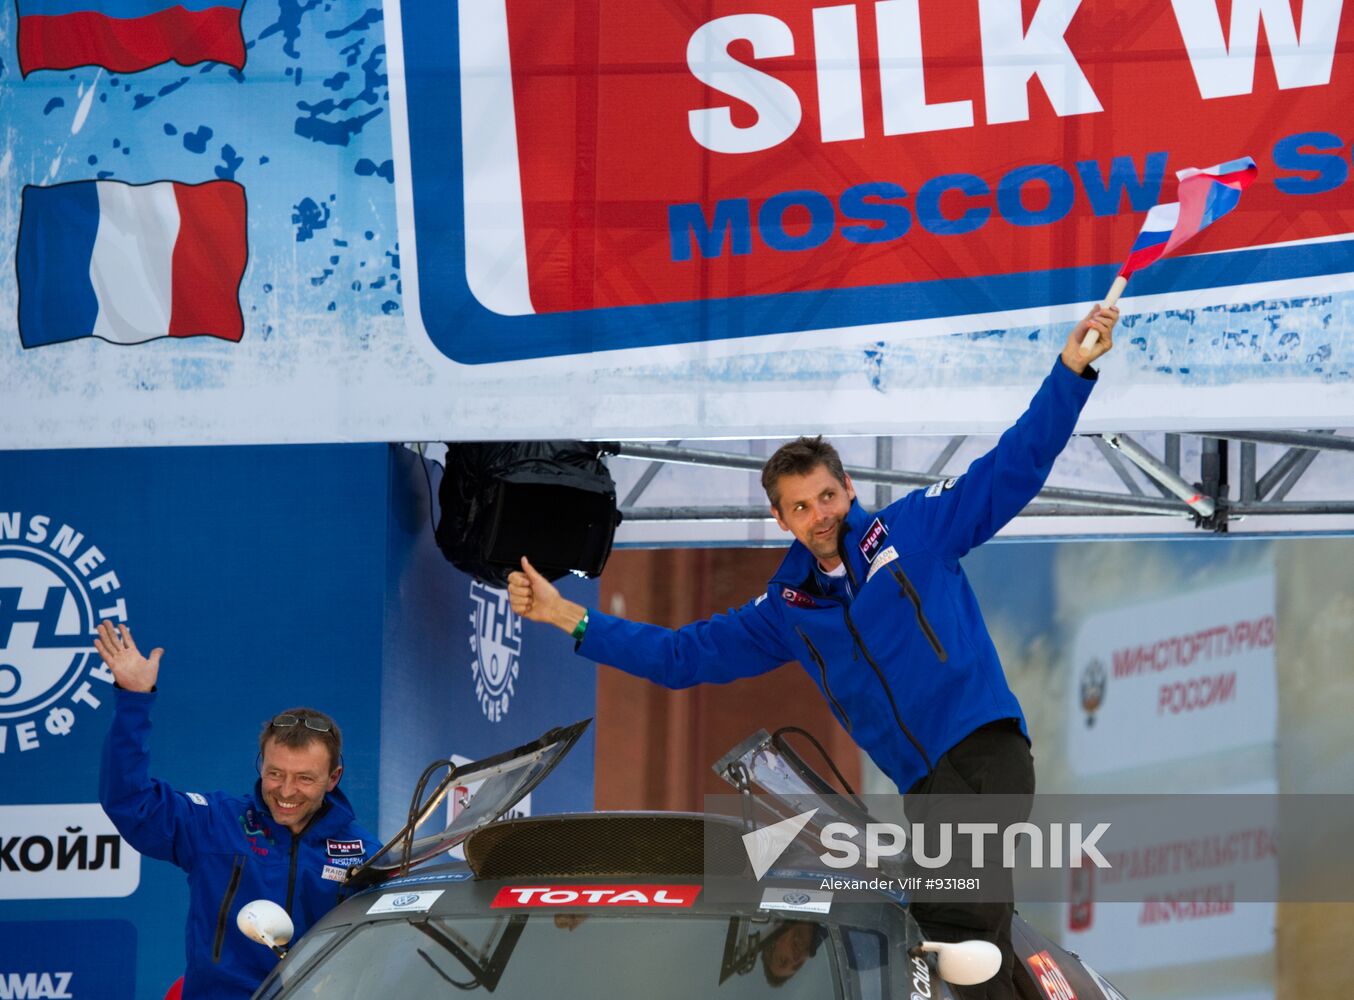 Motorsport. Start of rally-ride "Silk Way"